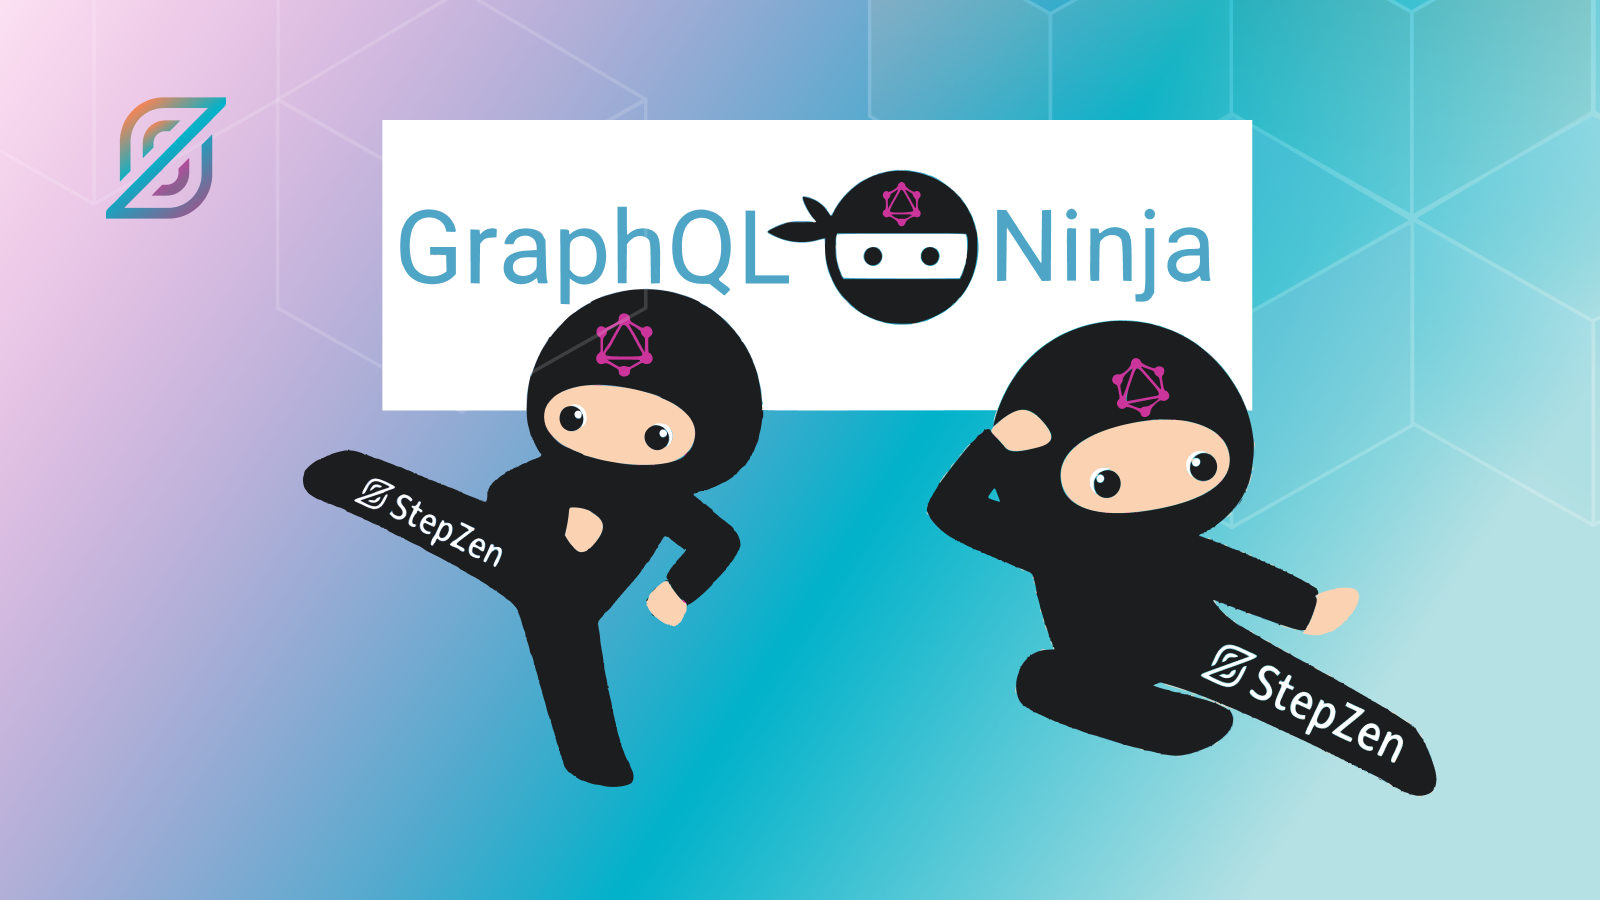 <p>Run a Query, Score GraphQL Ninja Stickers!</p>
